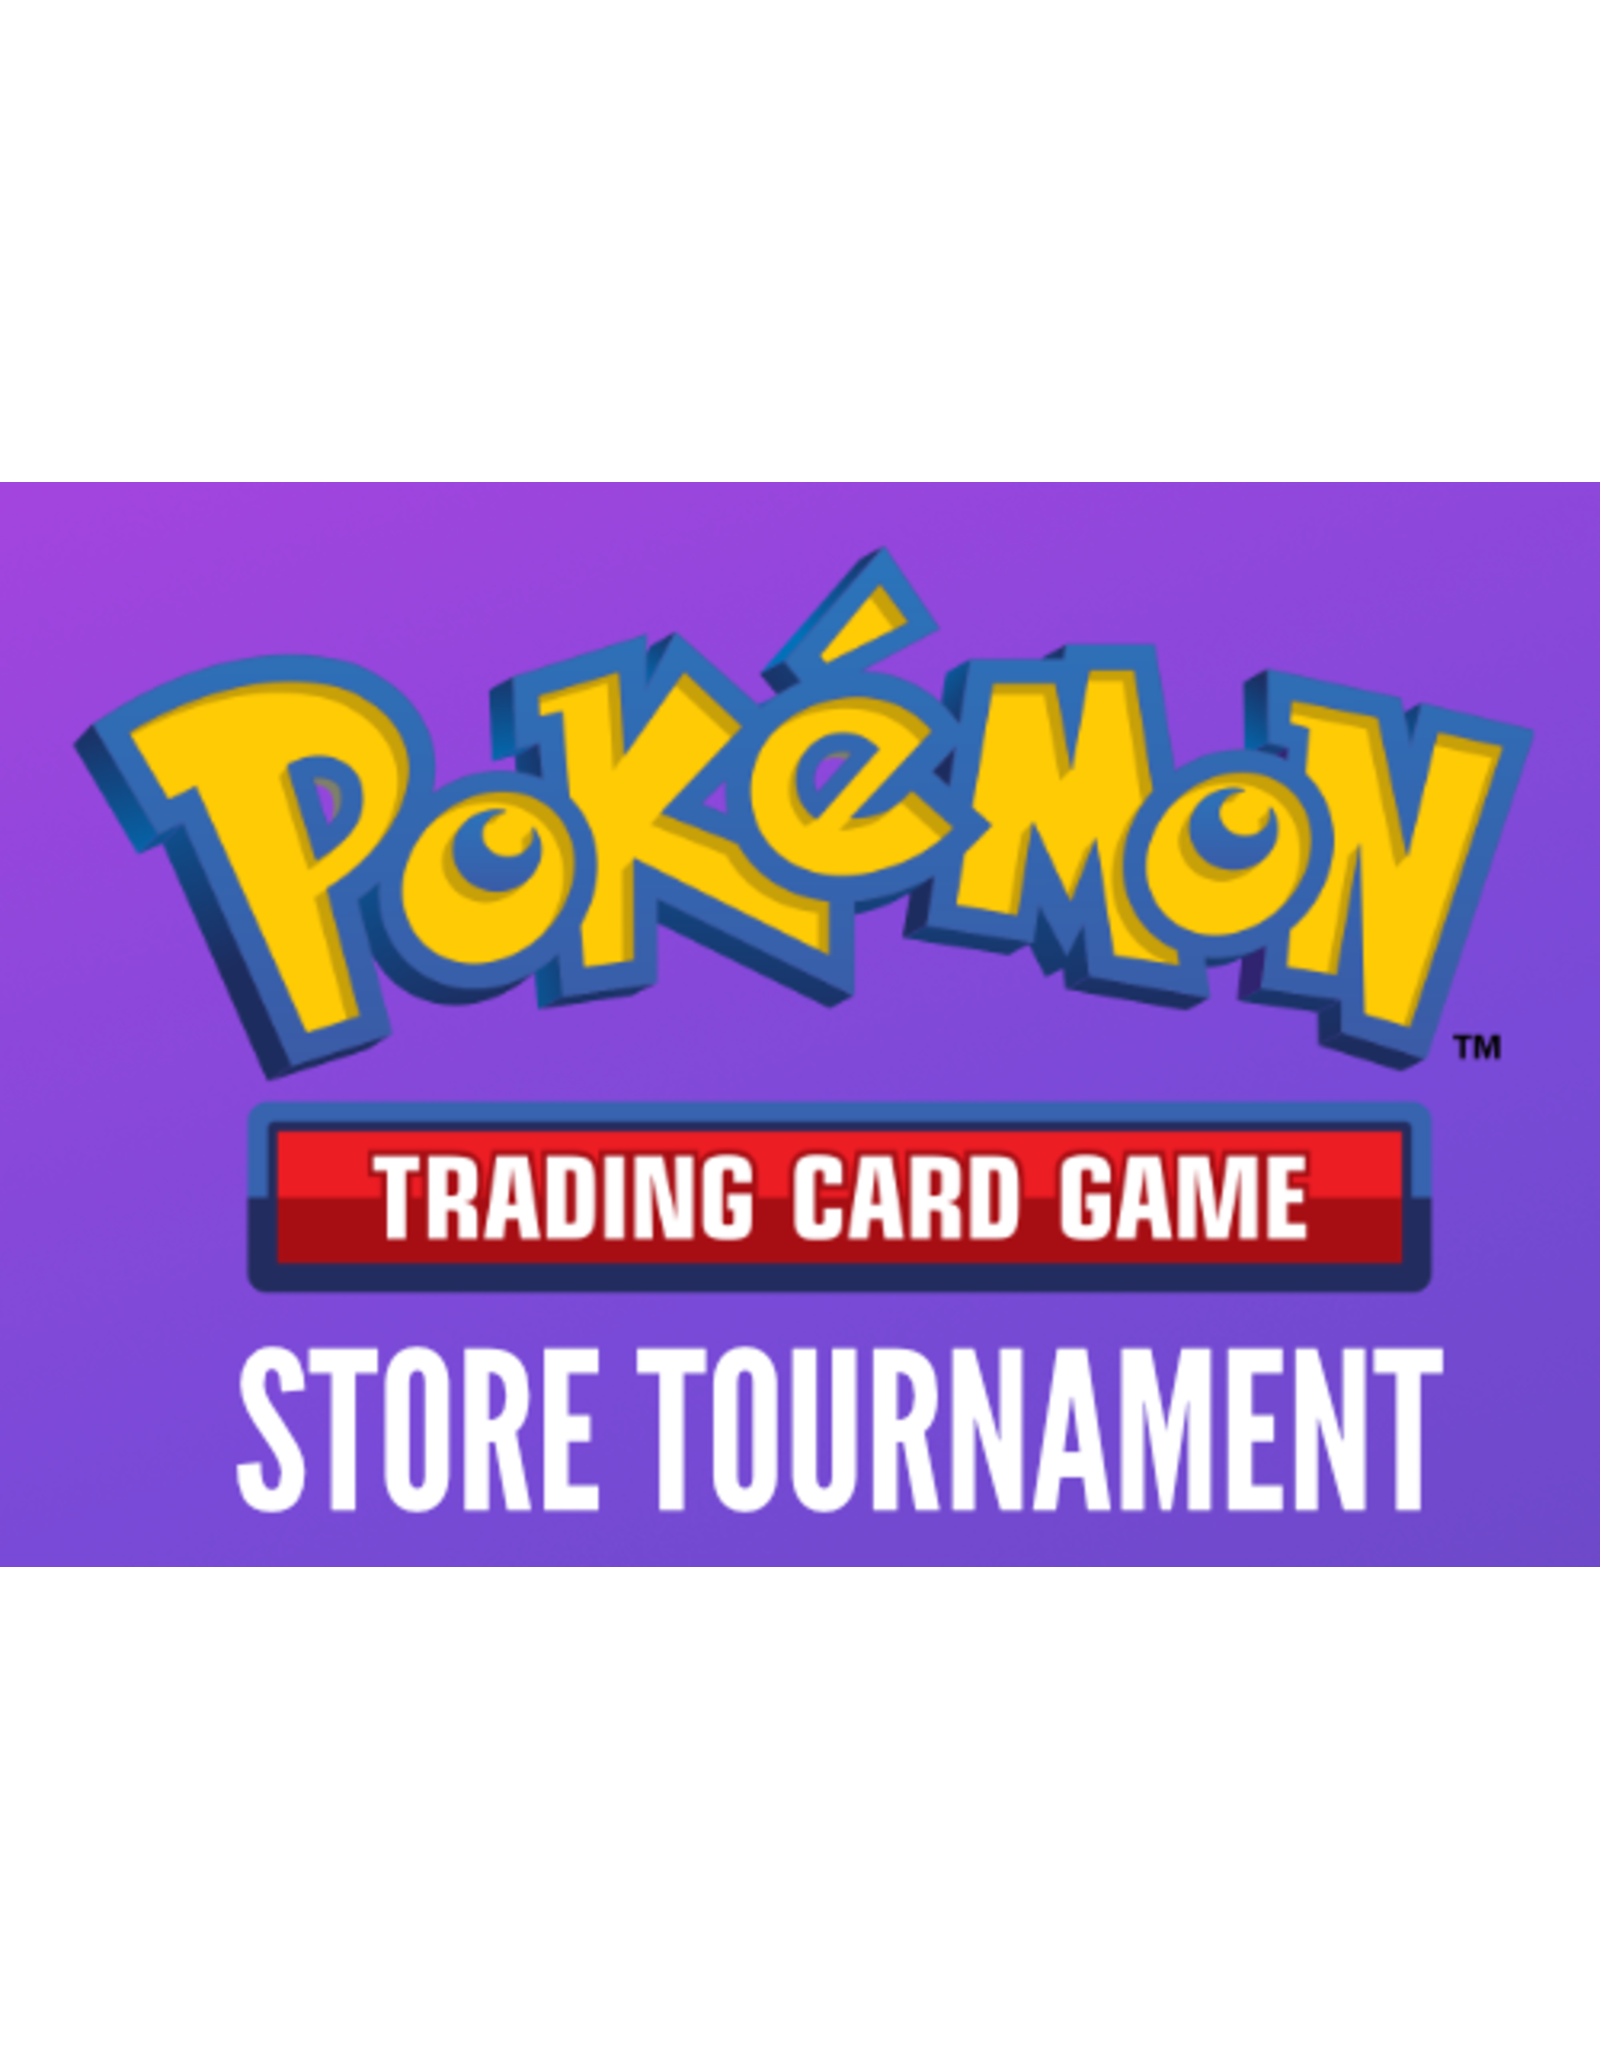 Pokémon Store Tournament - April 14th